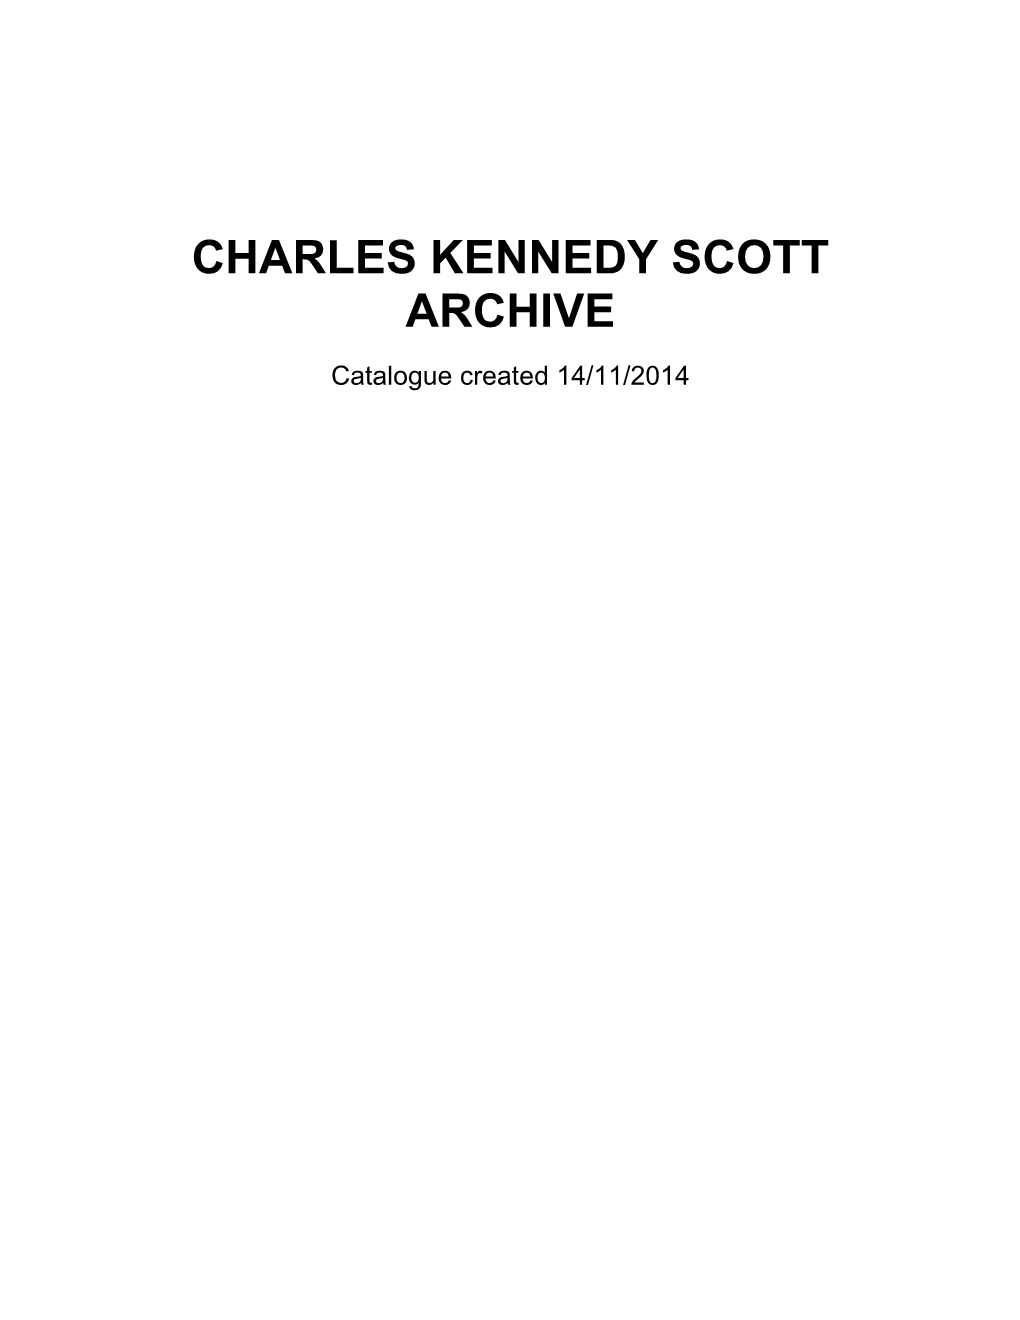 Charles Kennedy Scott Archive